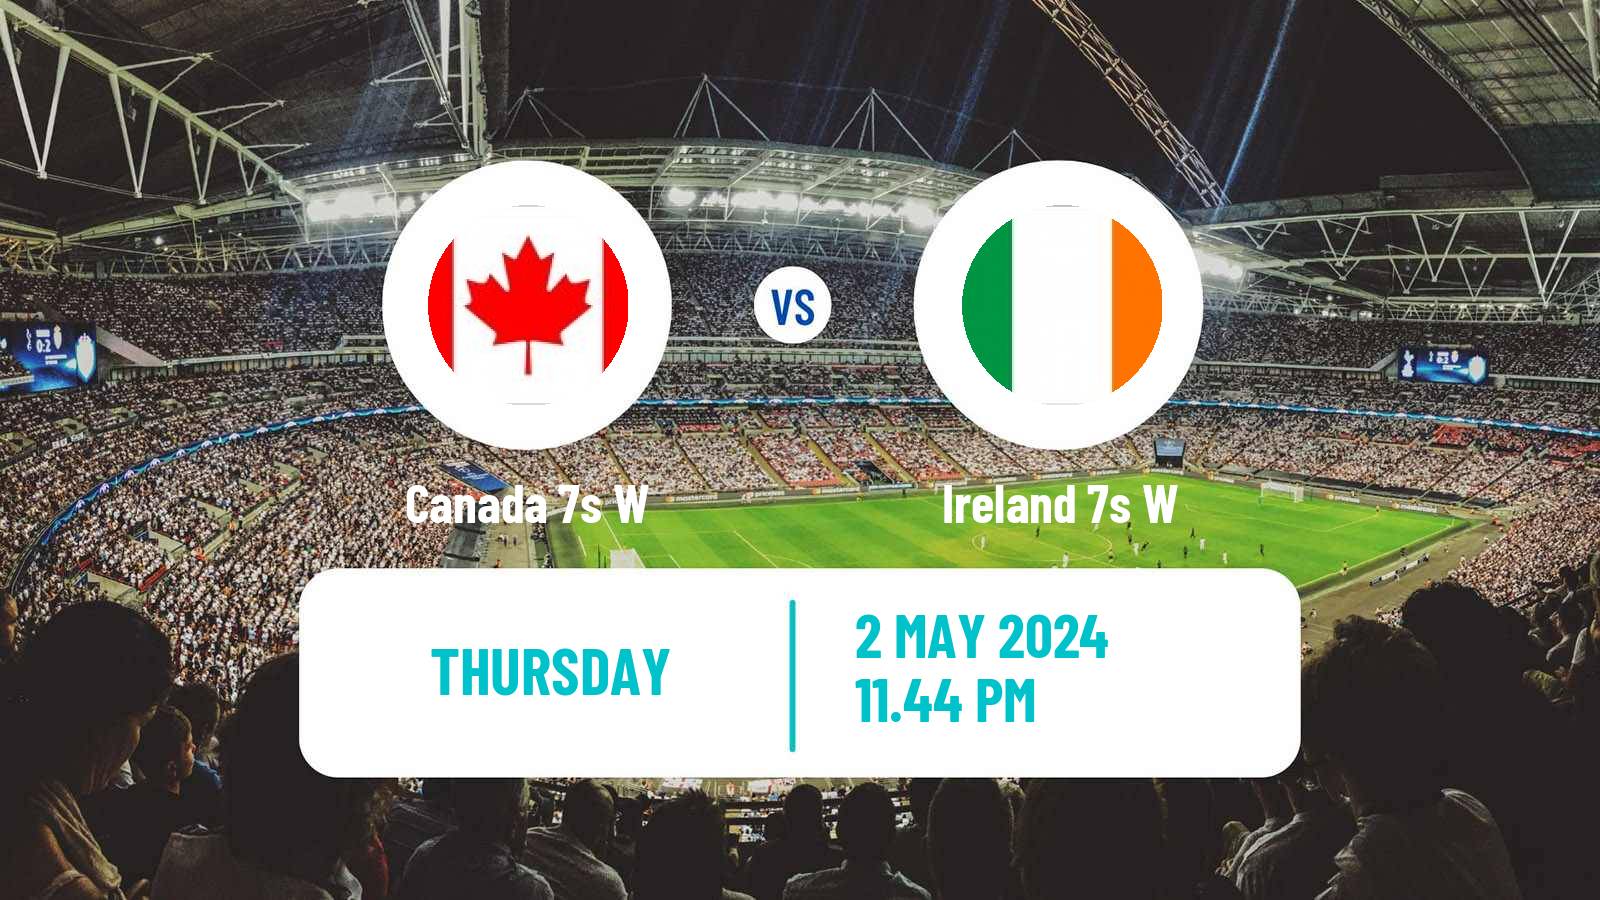 Soccer Sevens World Series Women - Singapore Canada 7s W - Ireland 7s W